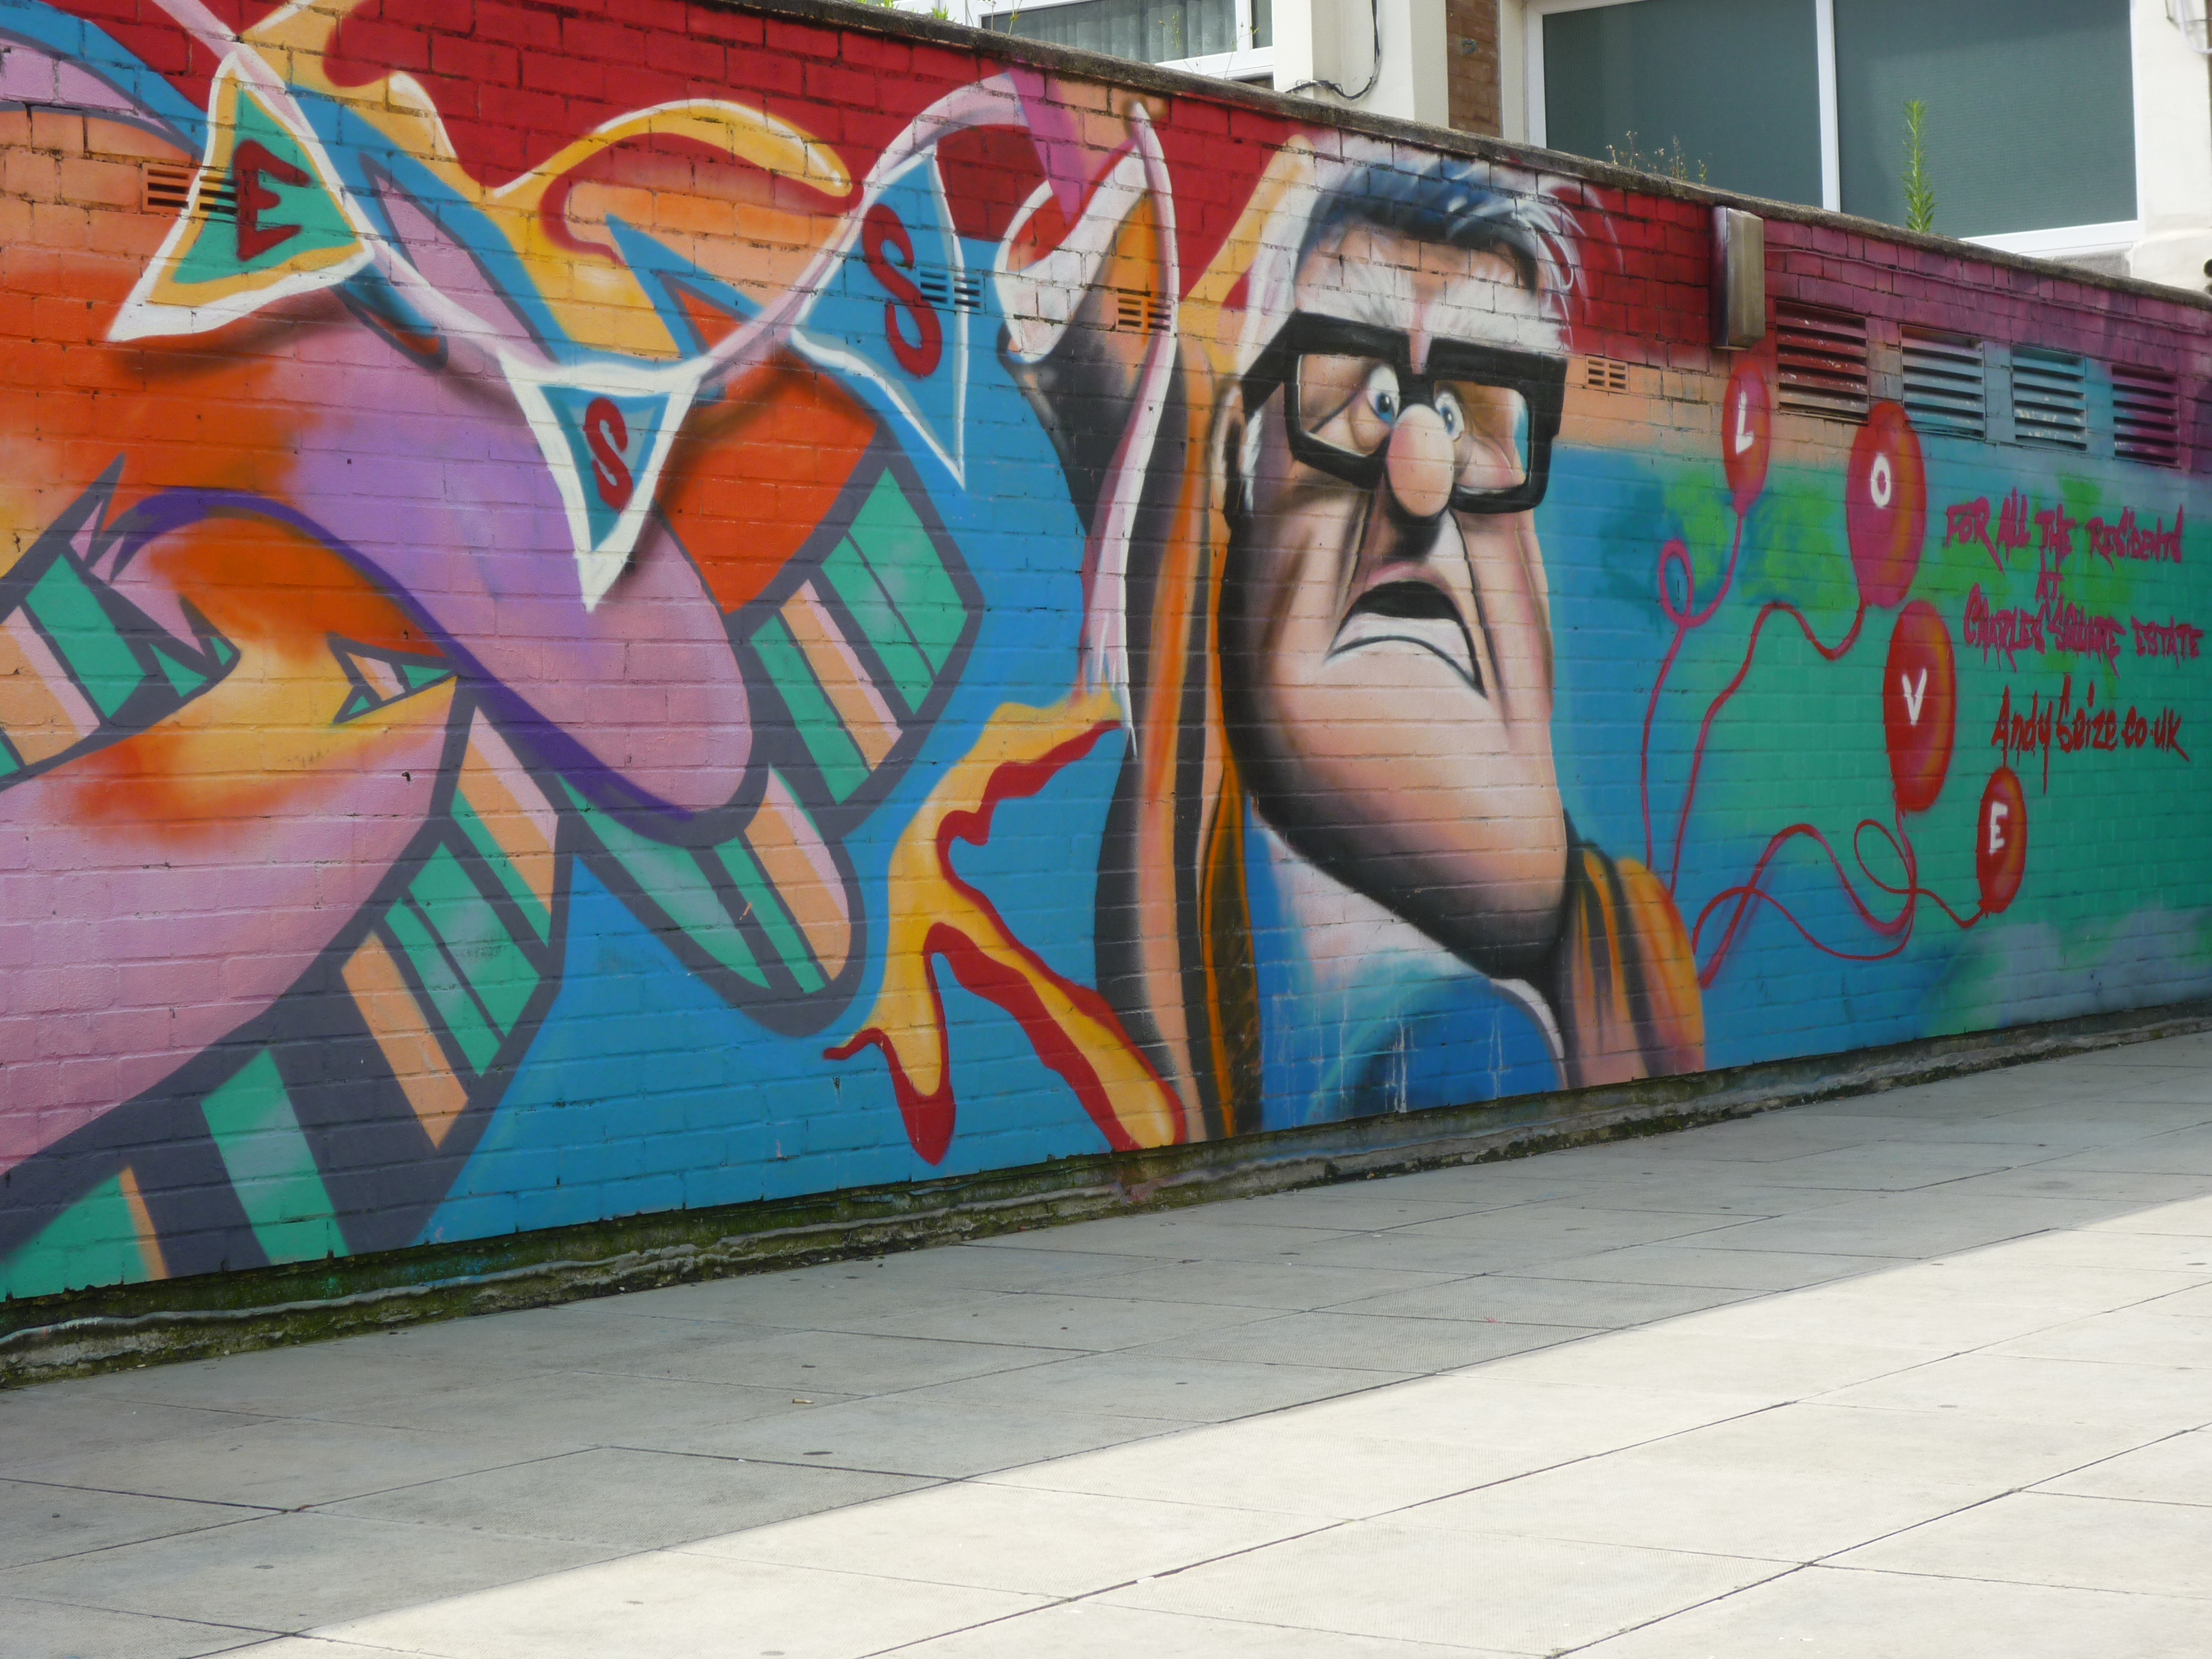 Street Art in London 2 - Hoxton